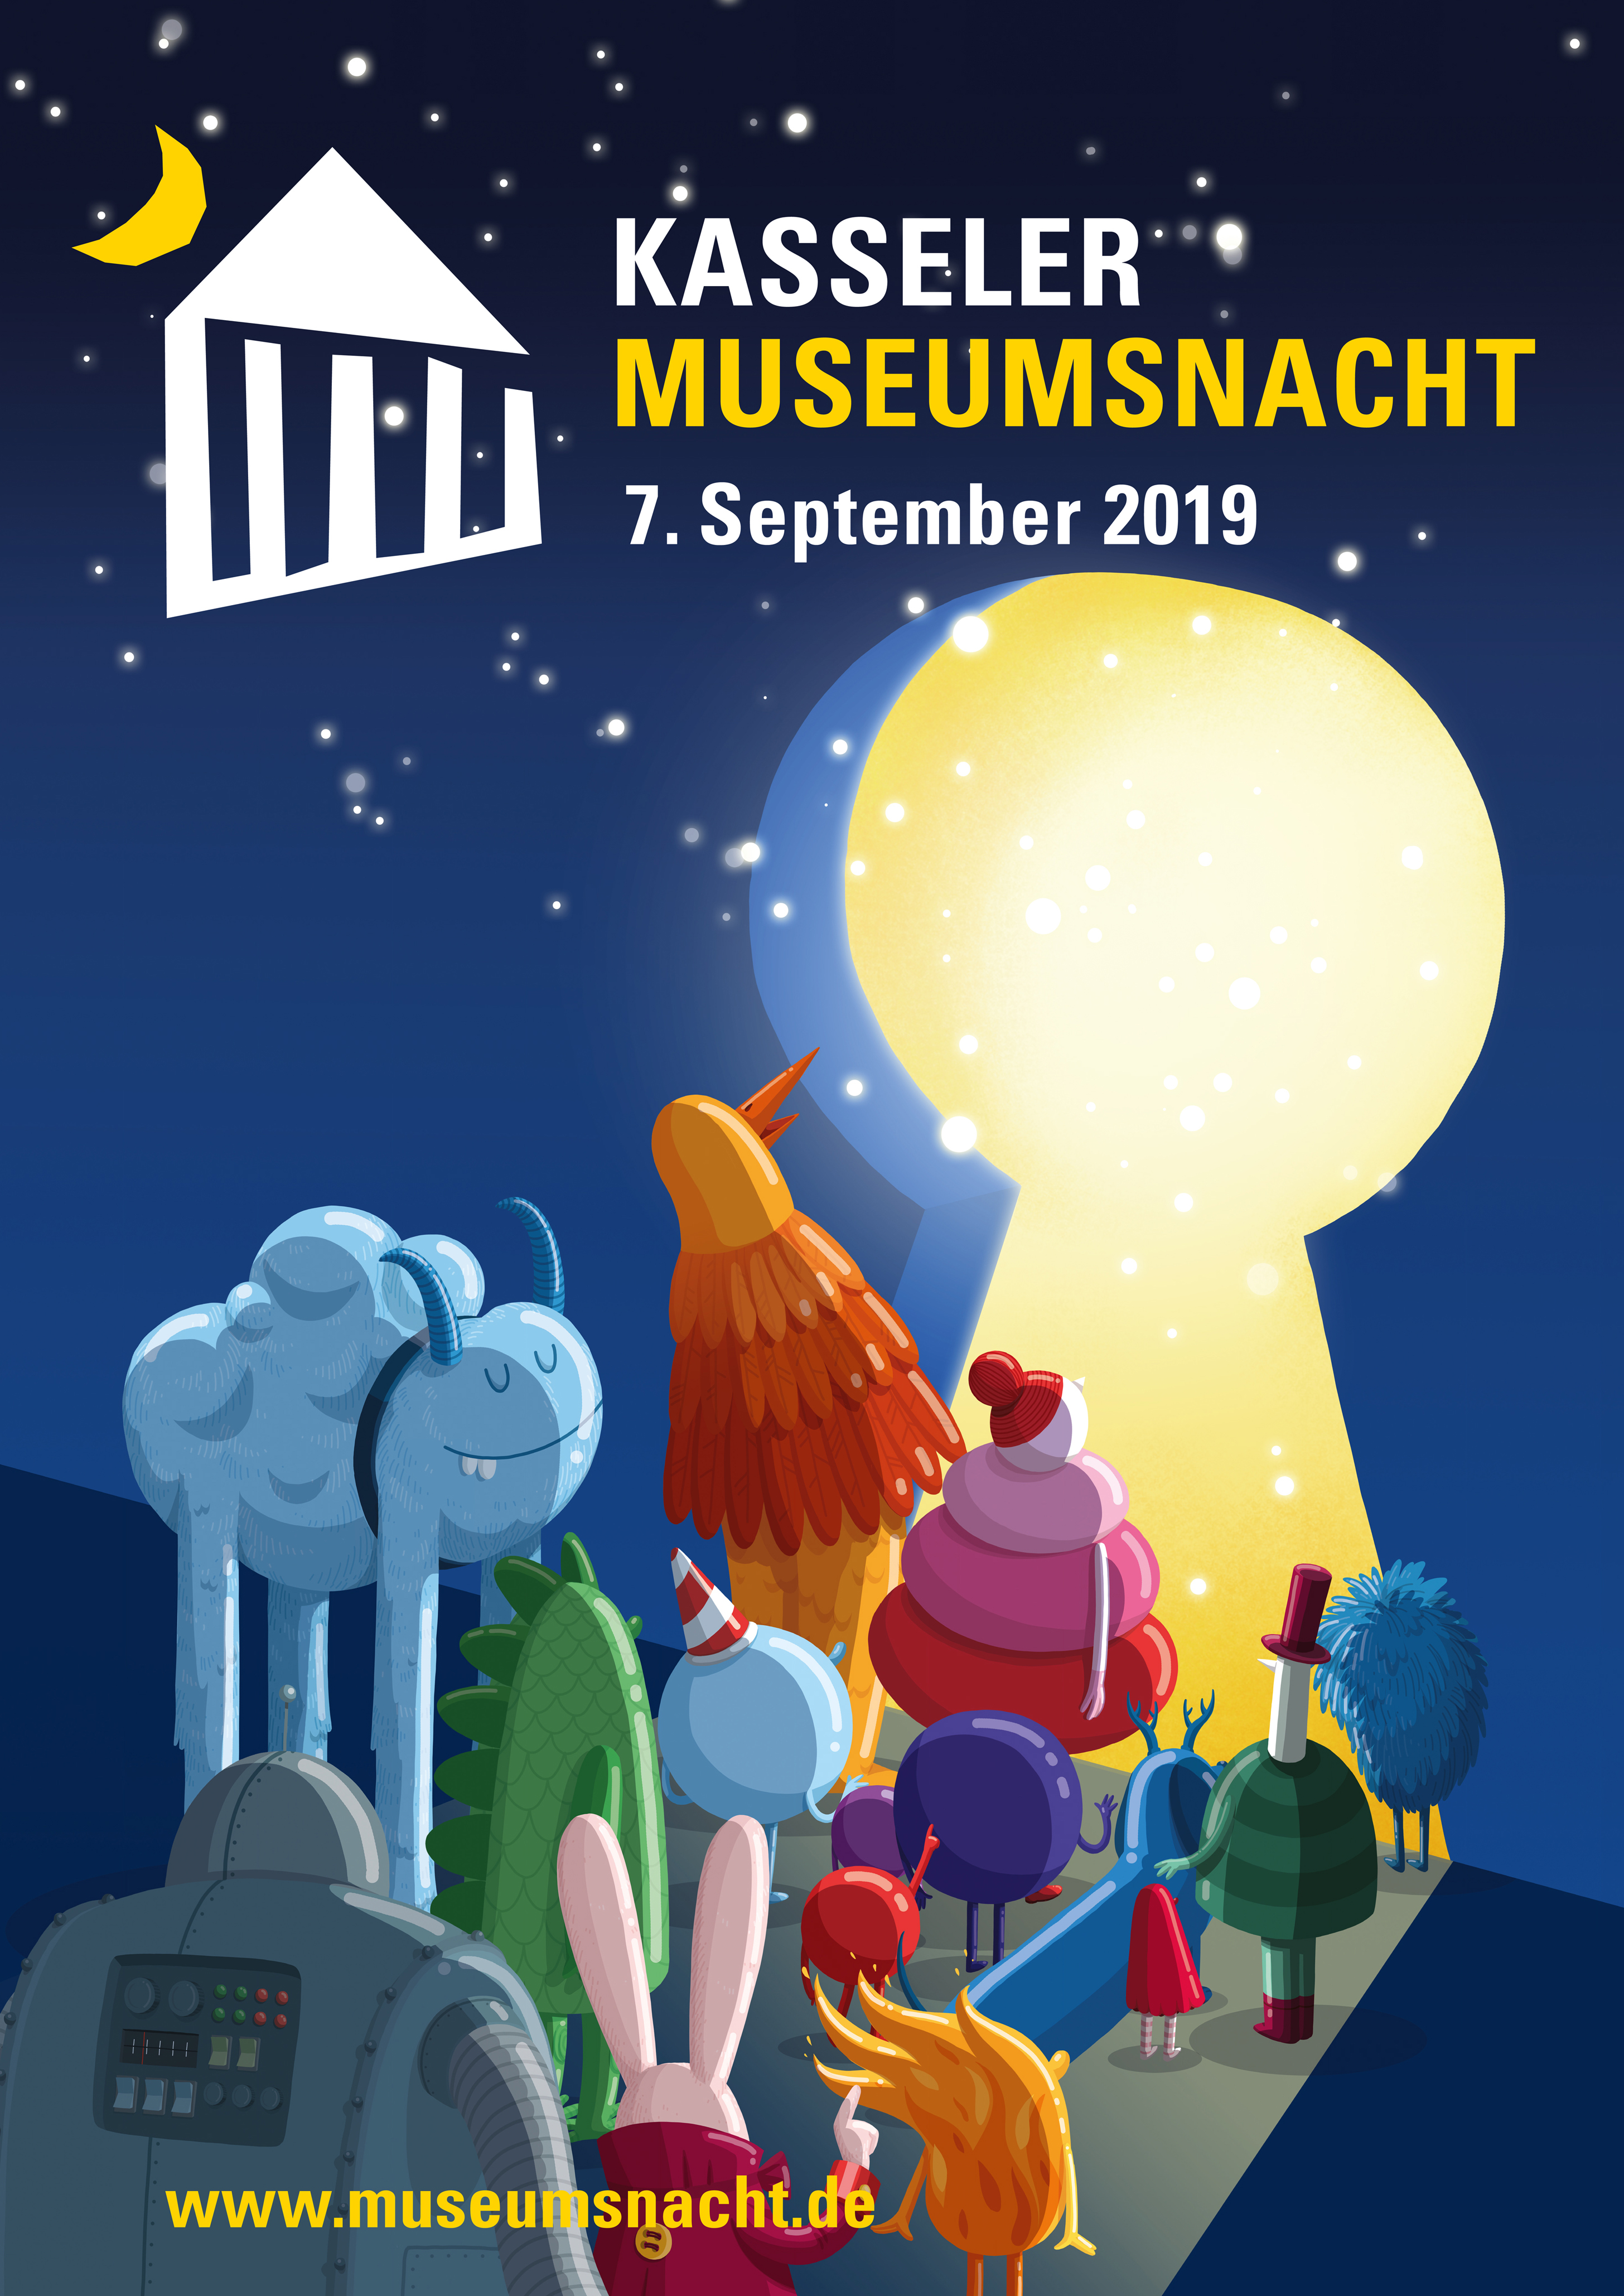 Kasseler Museumsnacht 2019 